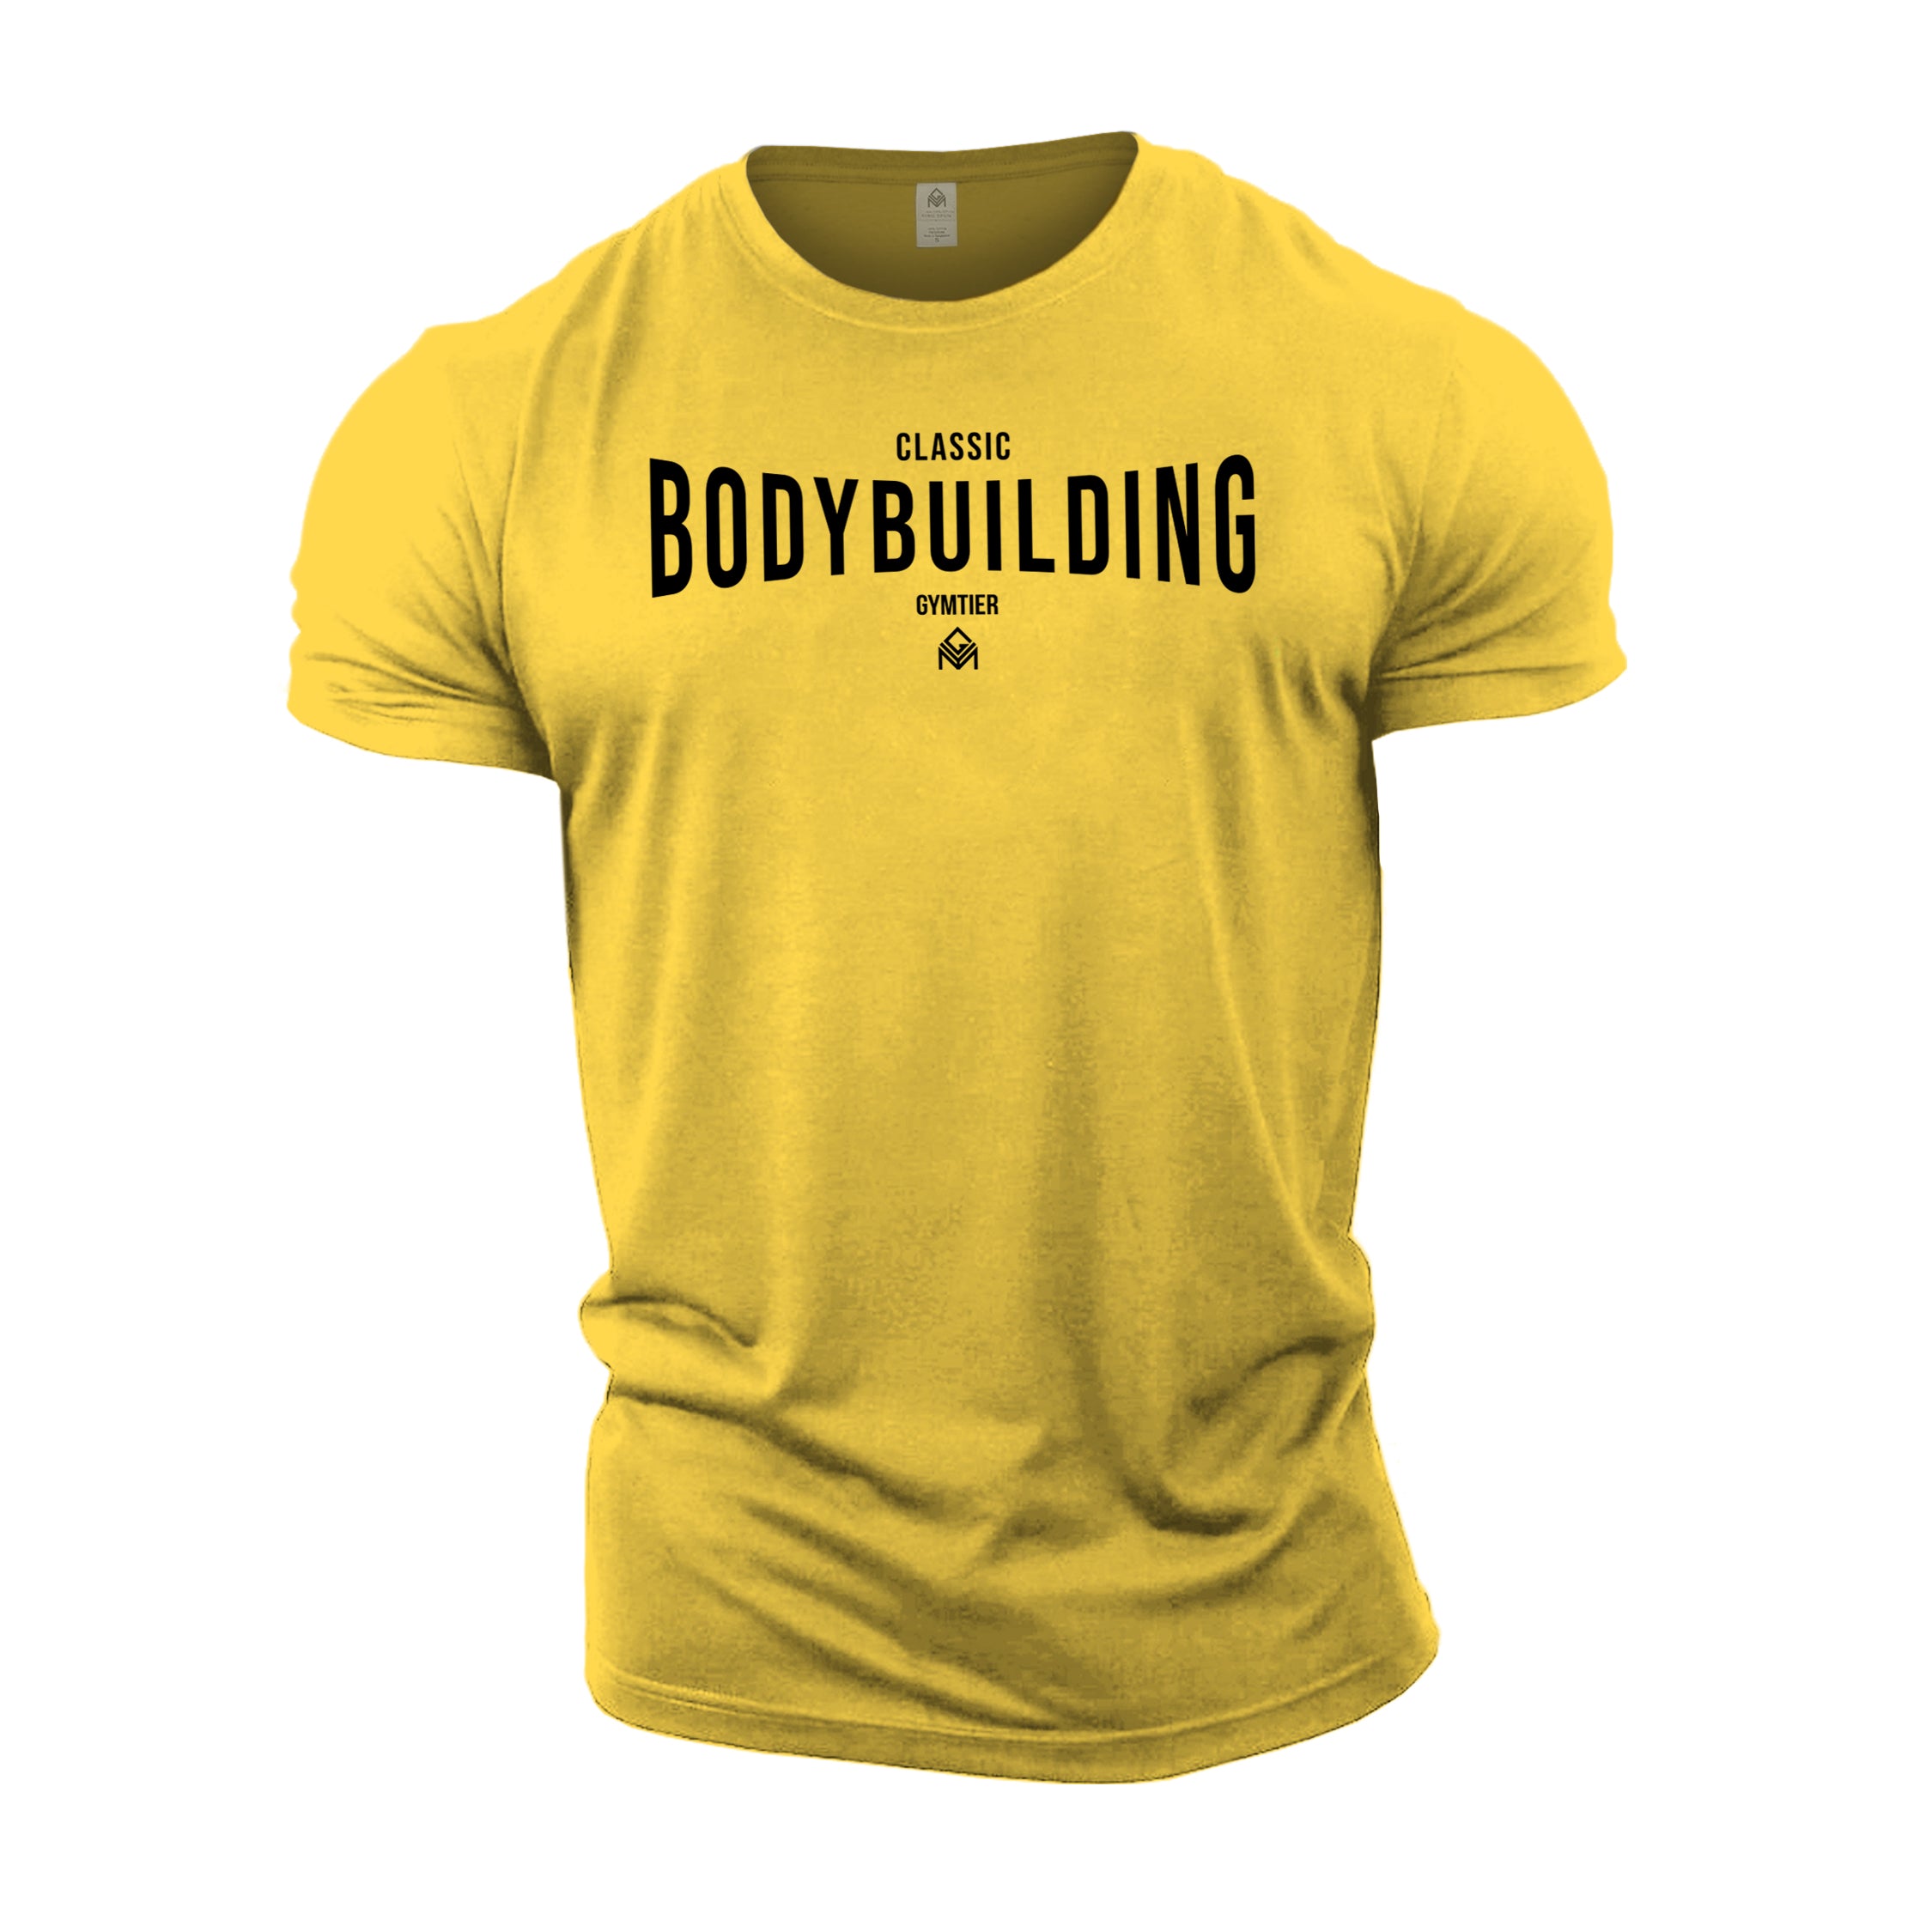 Classic Bodybuilding - Gym T-Shirt